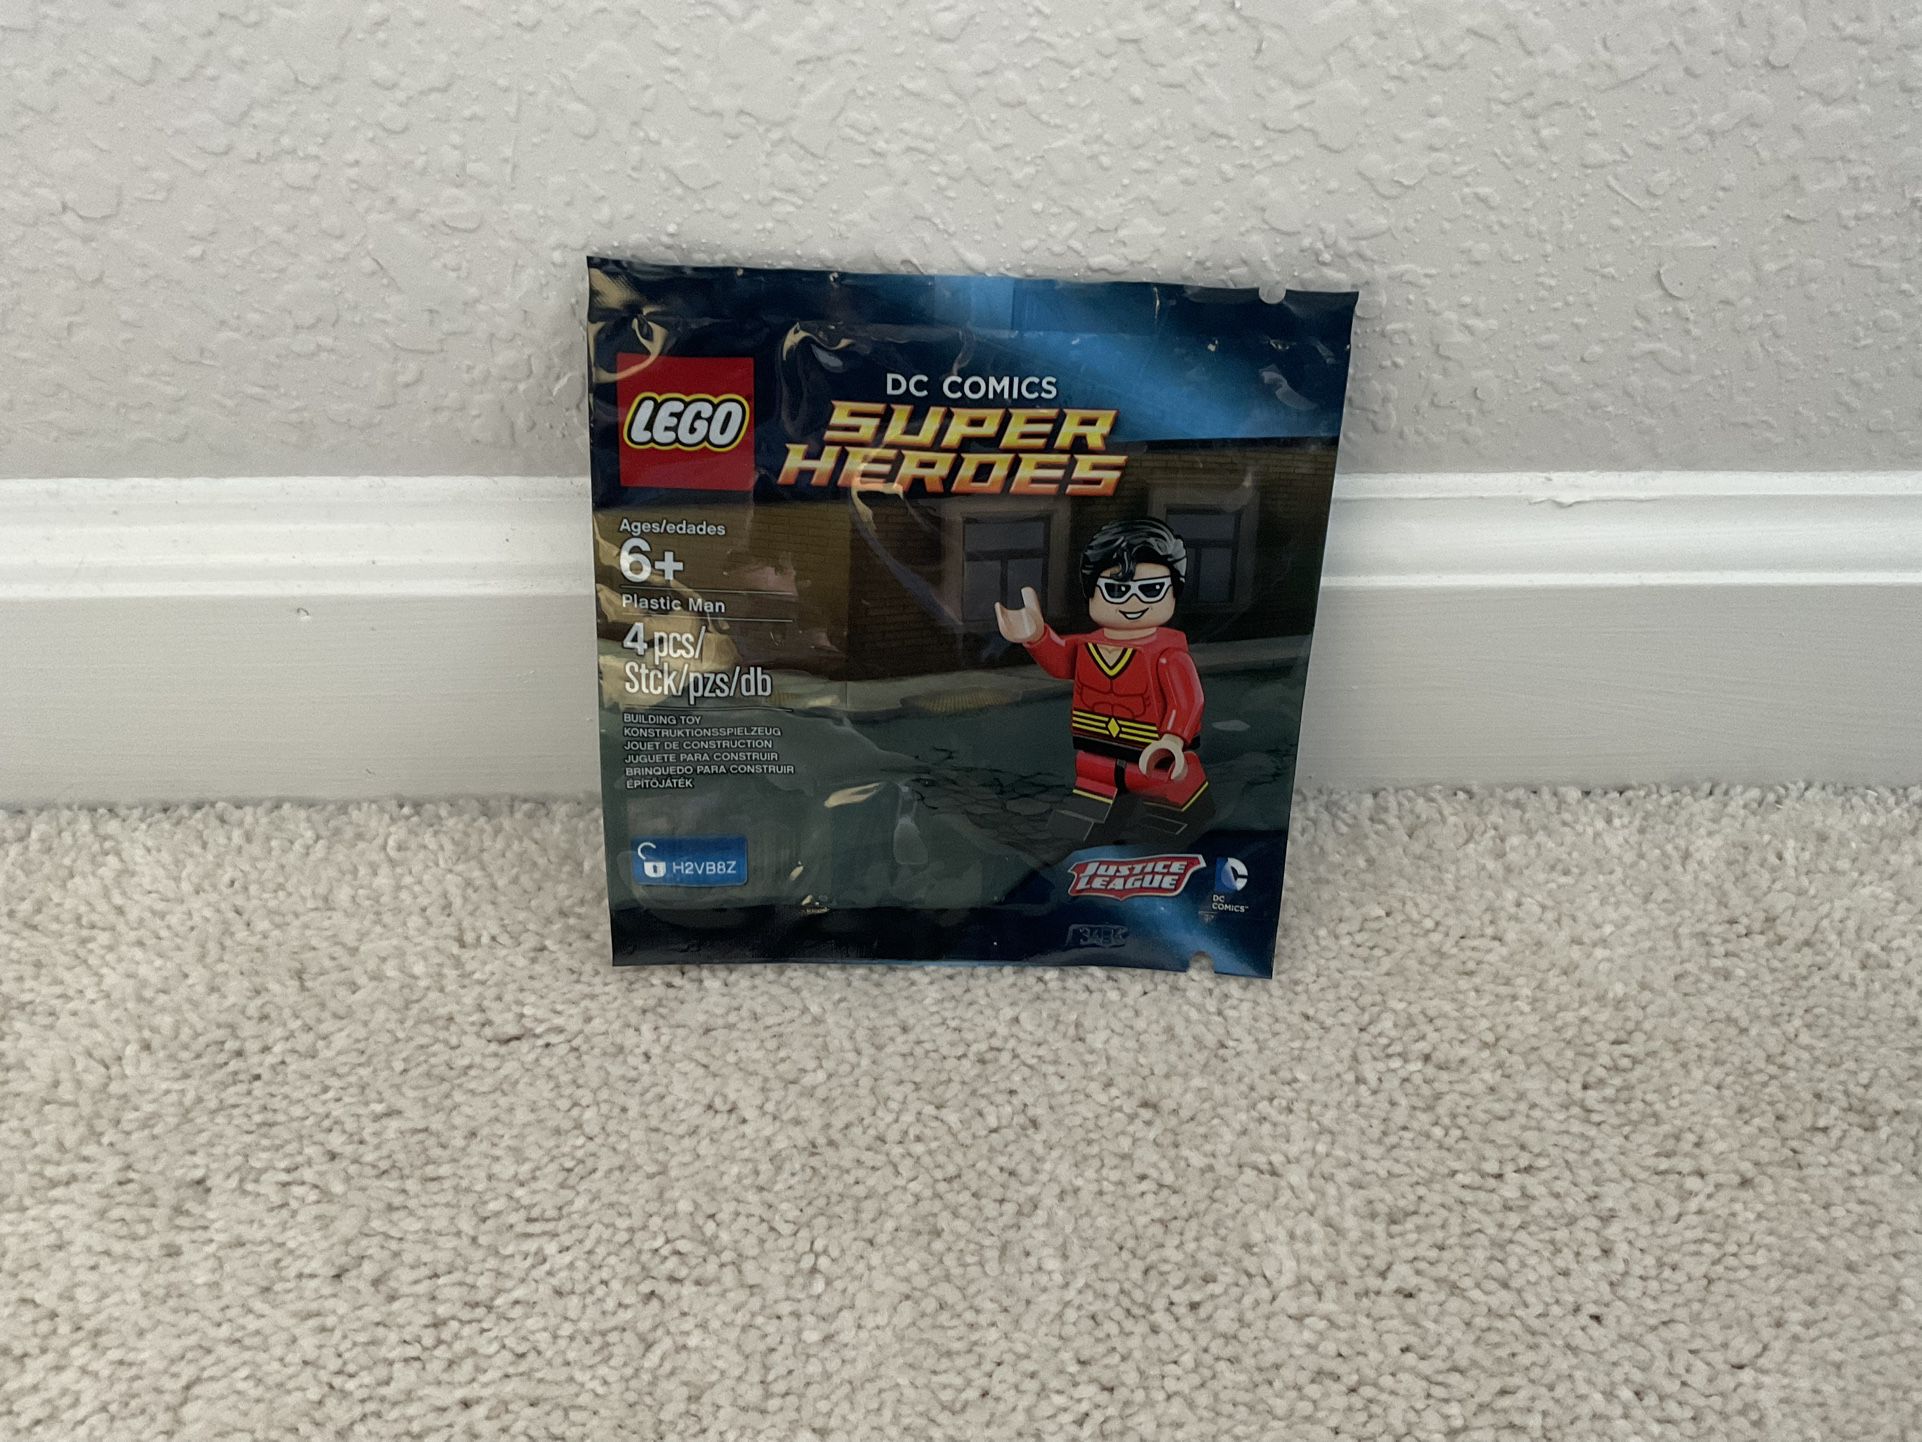 Lego Justice League Plastic Man Polybag